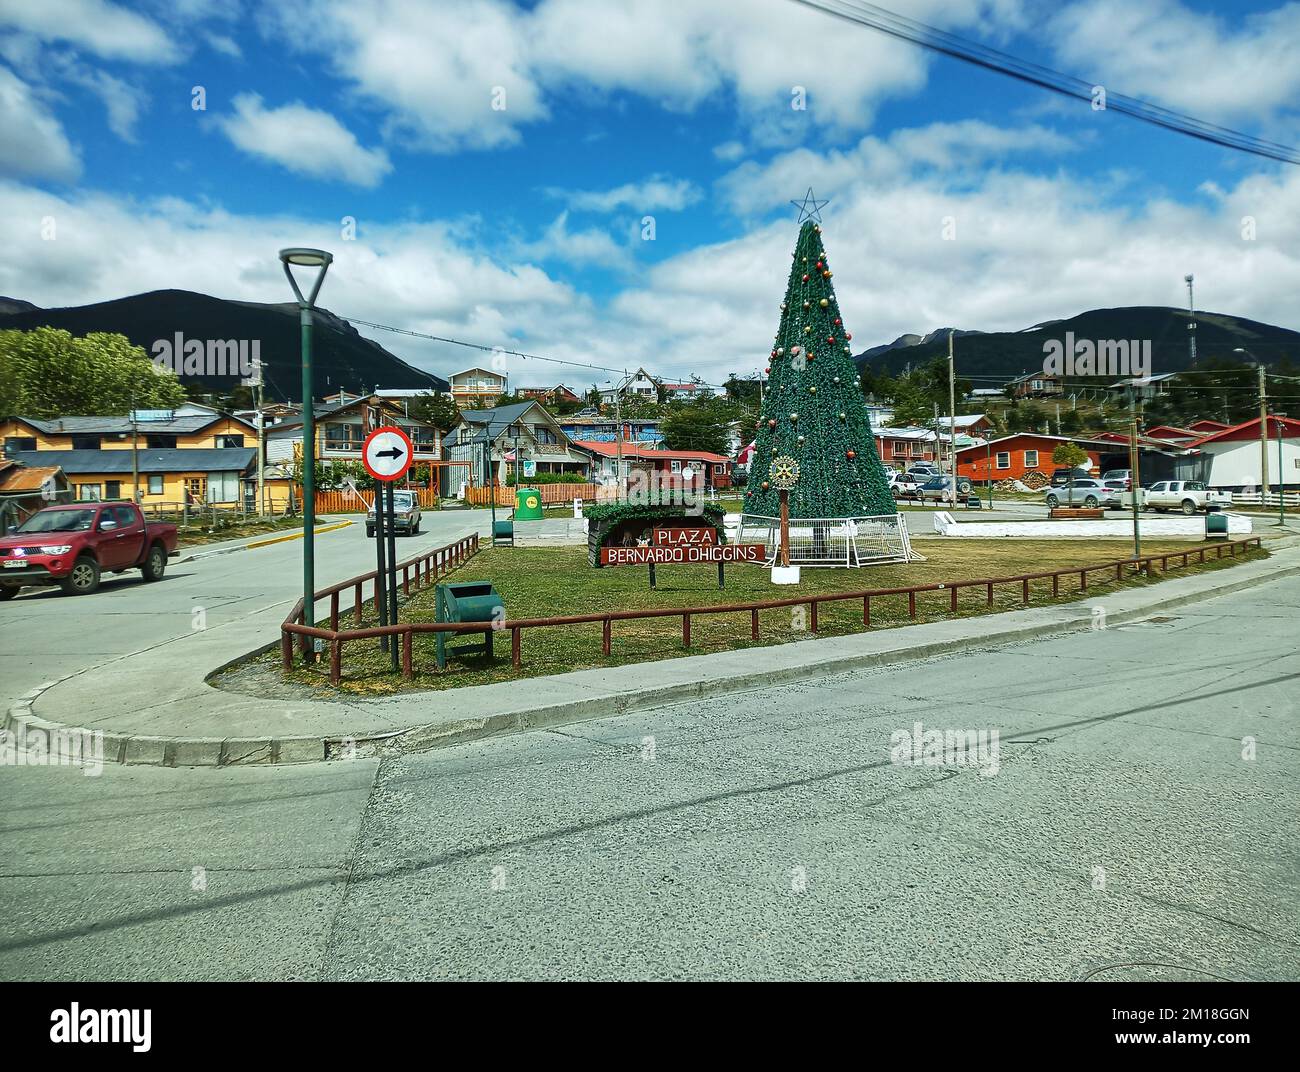 plaza bernado ohiggins, weihnachten in puerto williams, weihnachten in chile, weihnachtsfeier in chile, weihnachten in Antartictica, chile, puerto williams Stockfoto